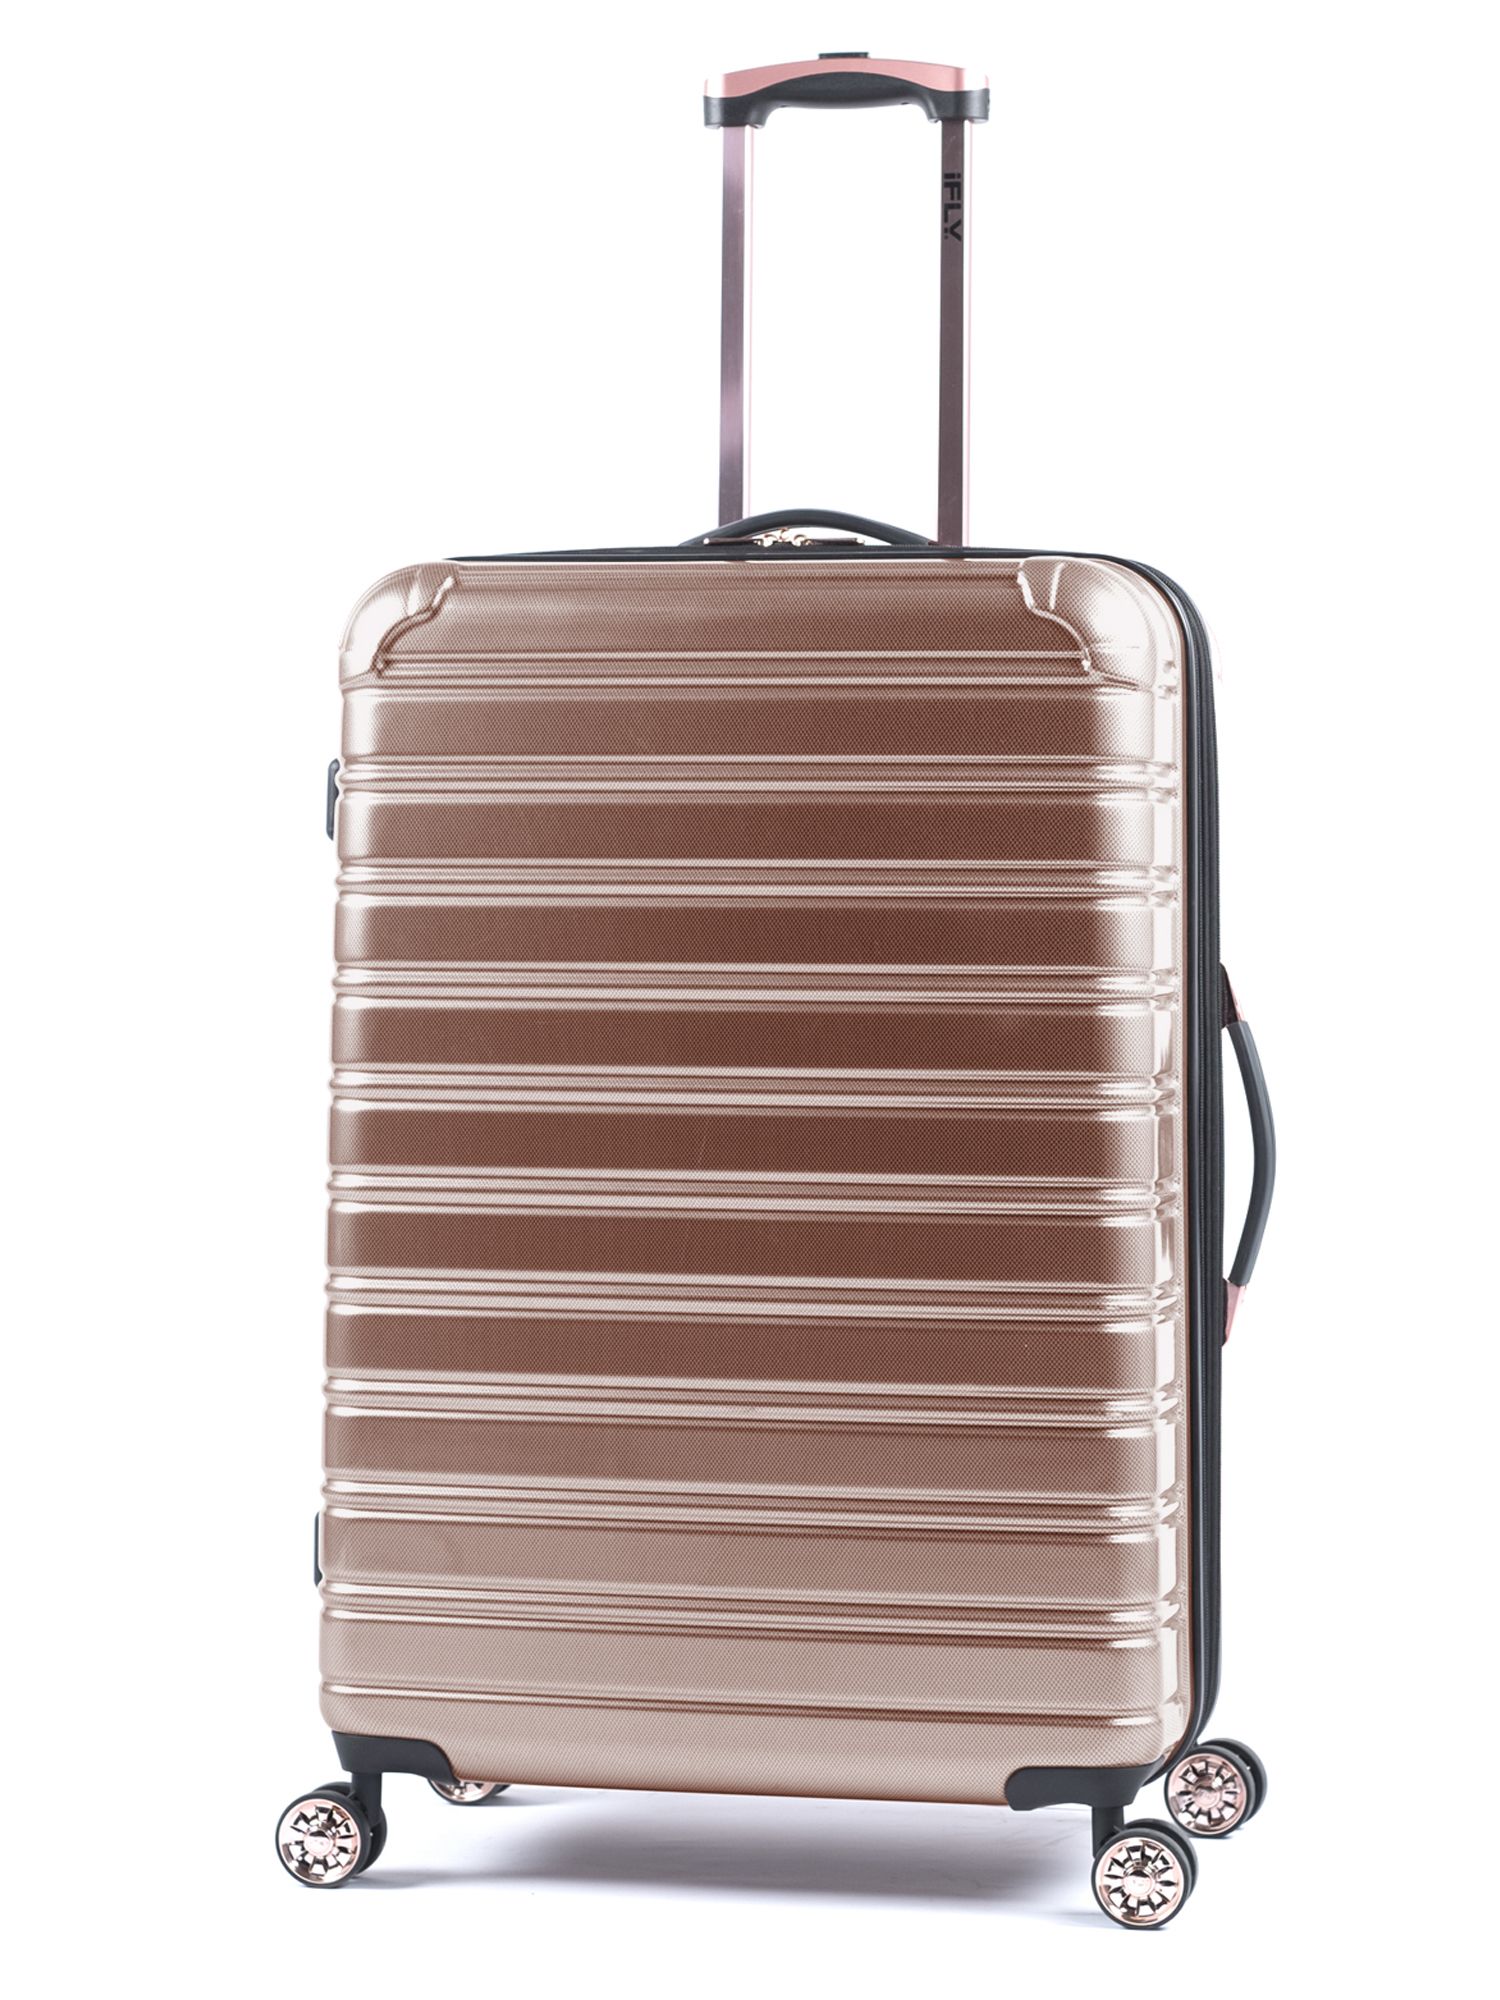 iFLY Hard Sided Fibertech 28" Checked Luggage, Rose Gold Luggage | Walmart (US)